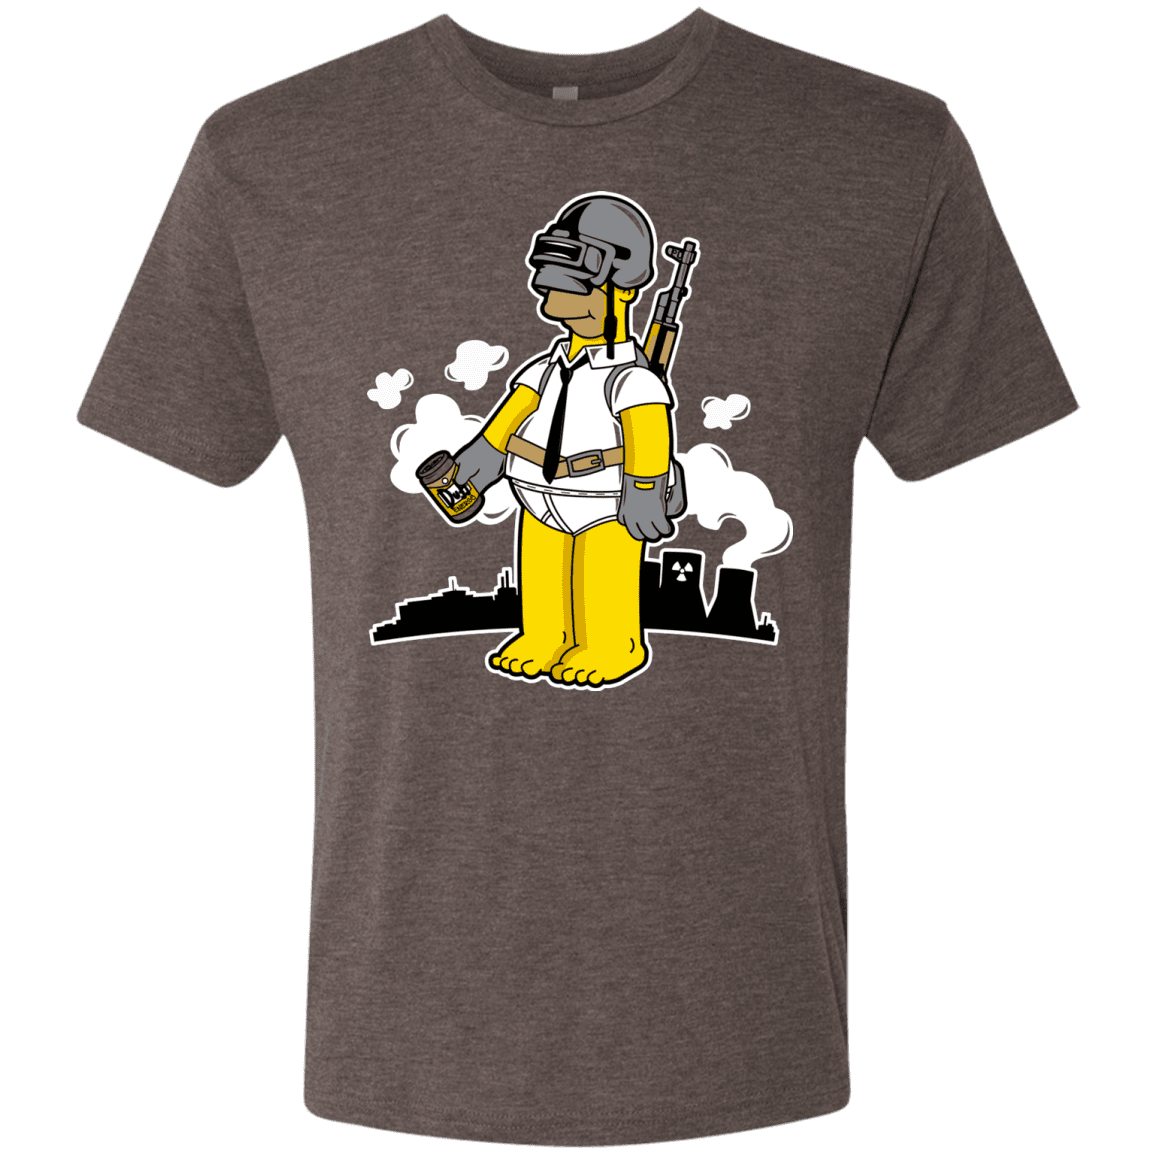 T-Shirts Macchiato / S PUB'N Men's Triblend T-Shirt